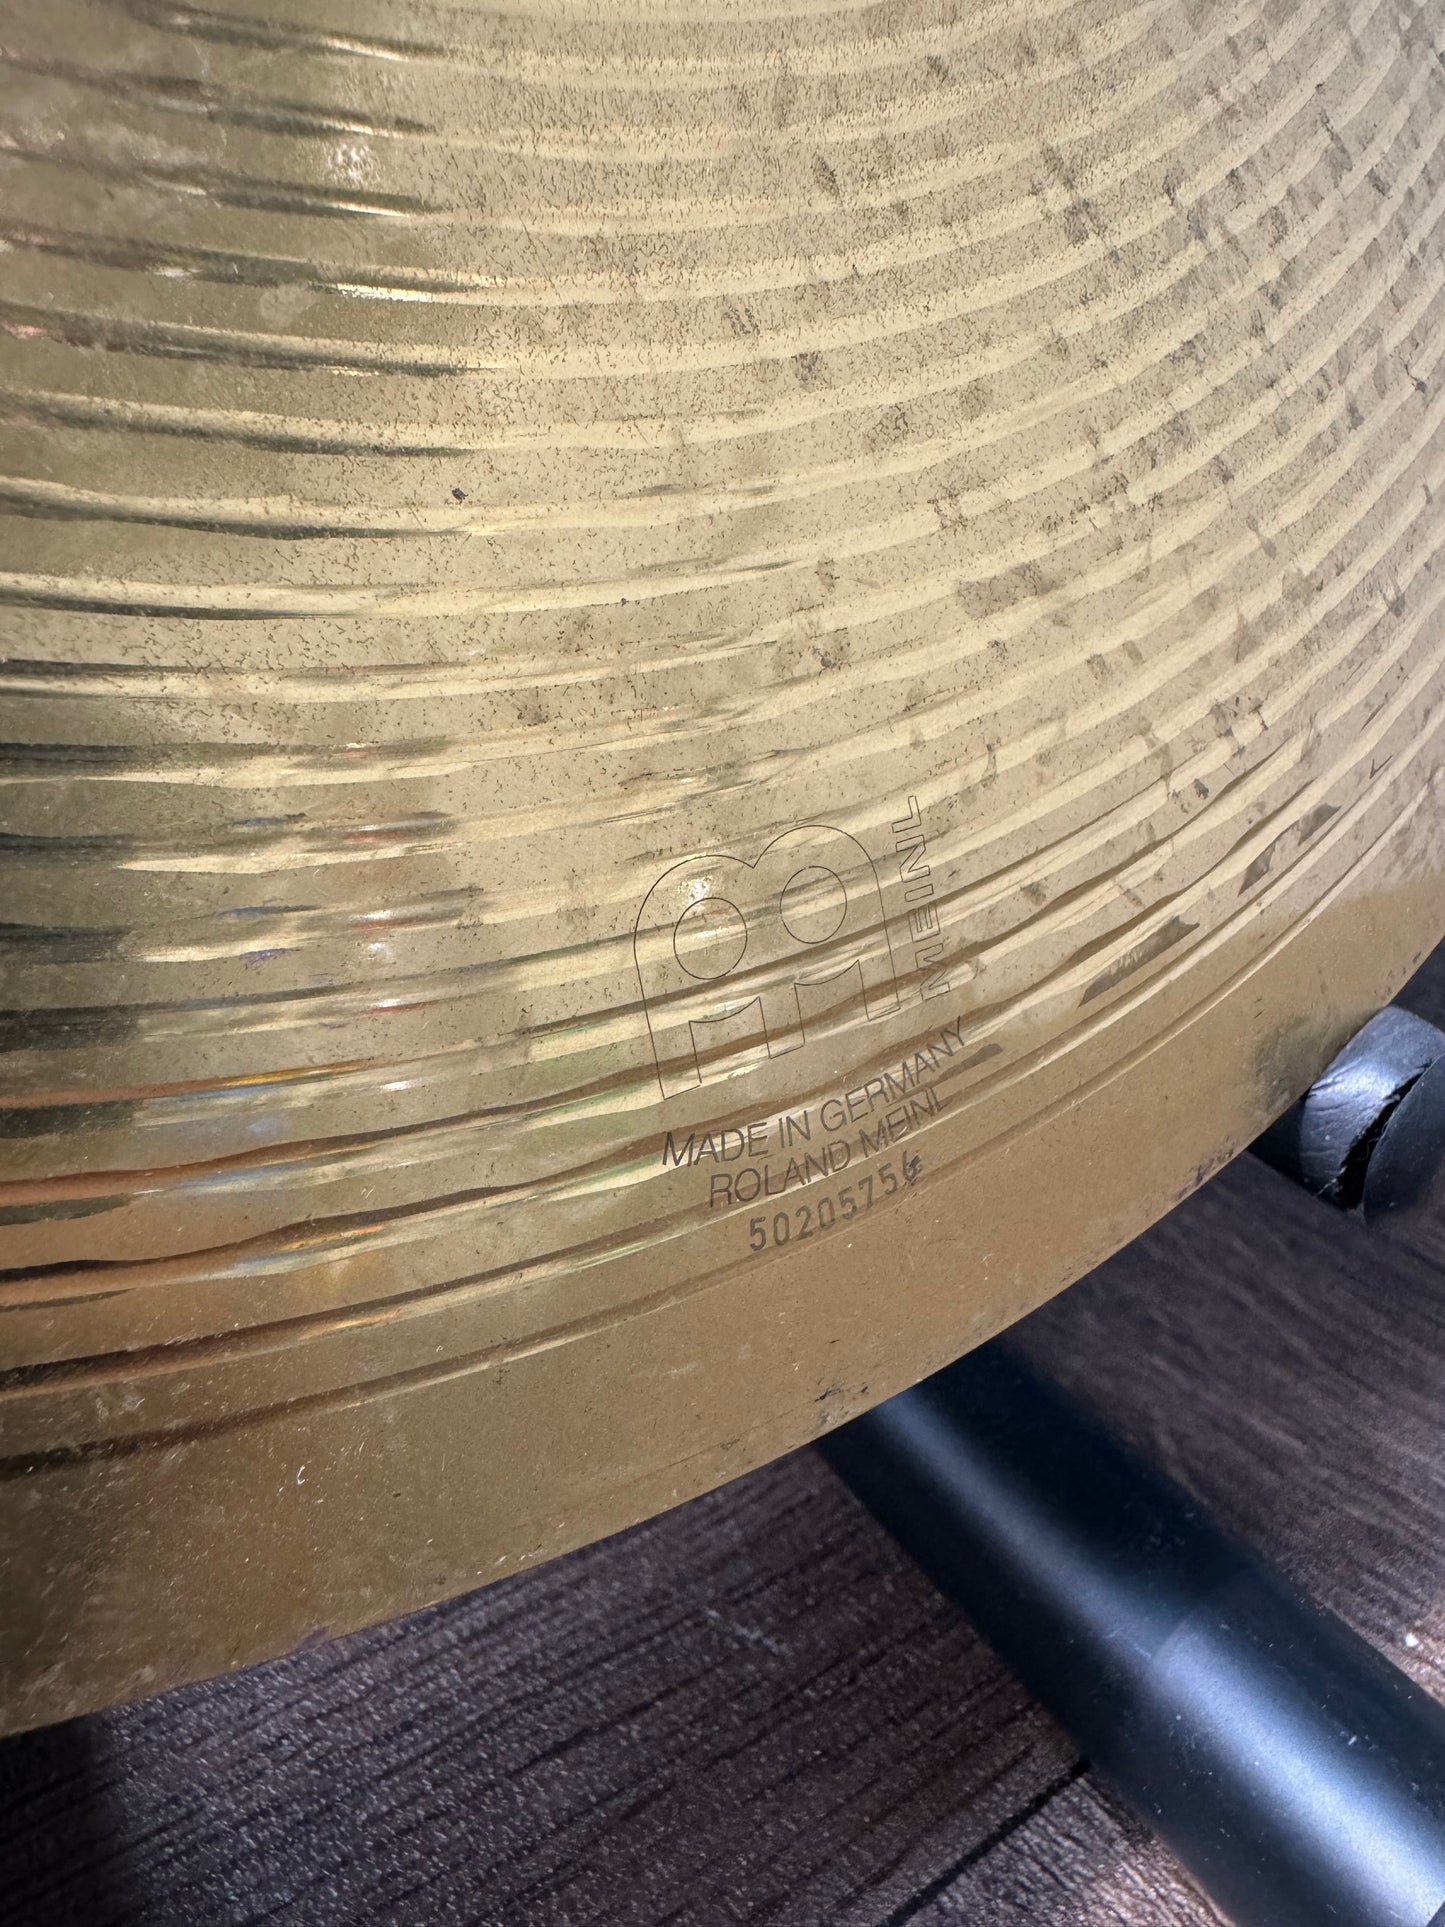 Meinl Headliner Brass Crash Cymbal 16”/40cm Cymbal Drum Accessory #LG32